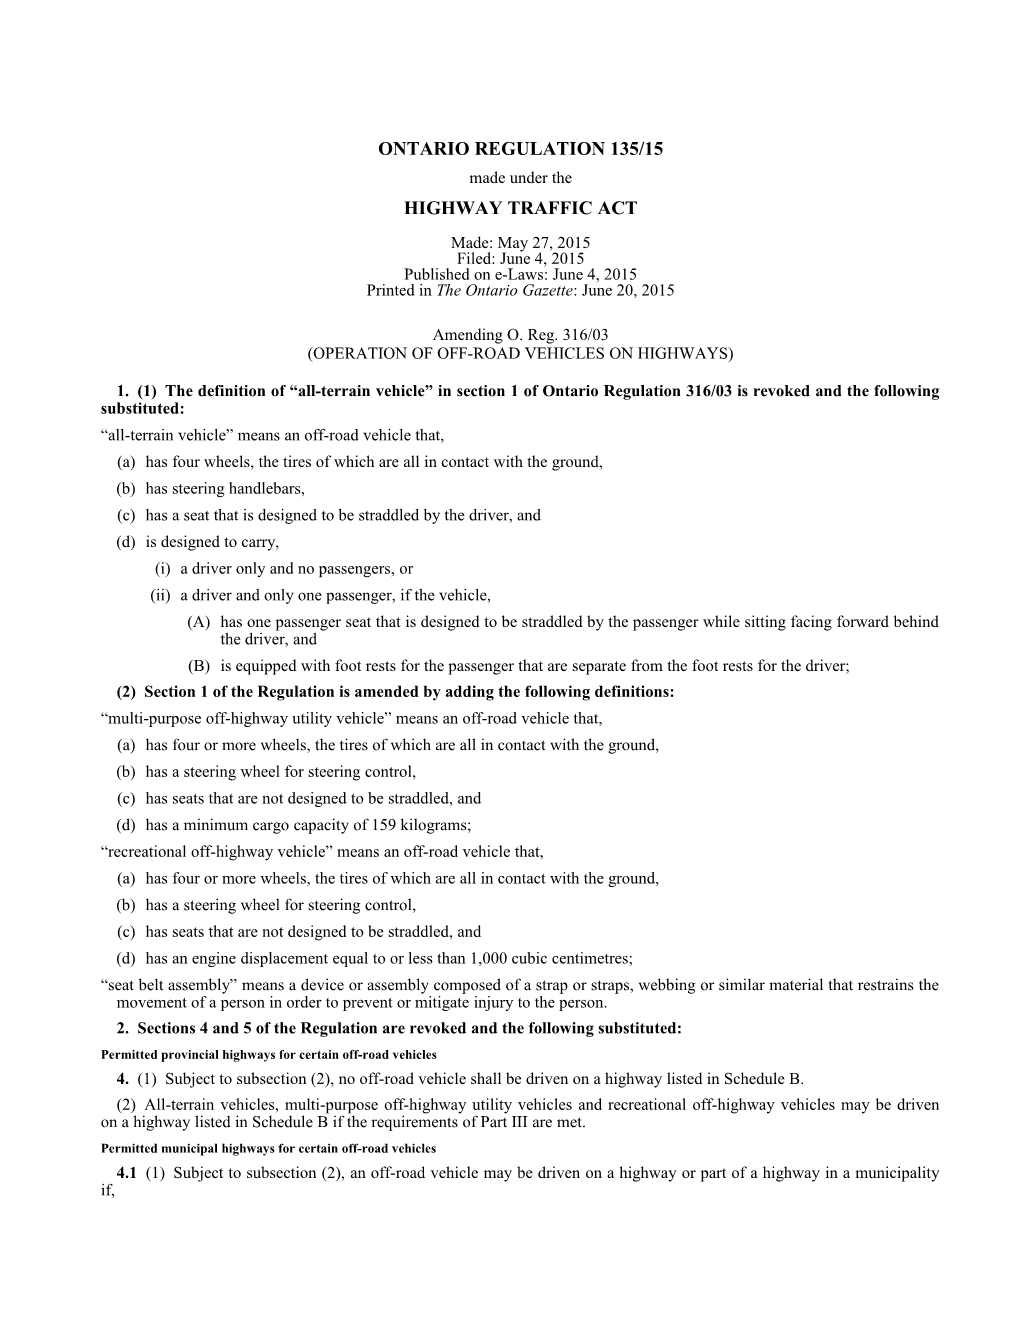 HIGHWAY TRAFFIC ACT - O. Reg. 135/15